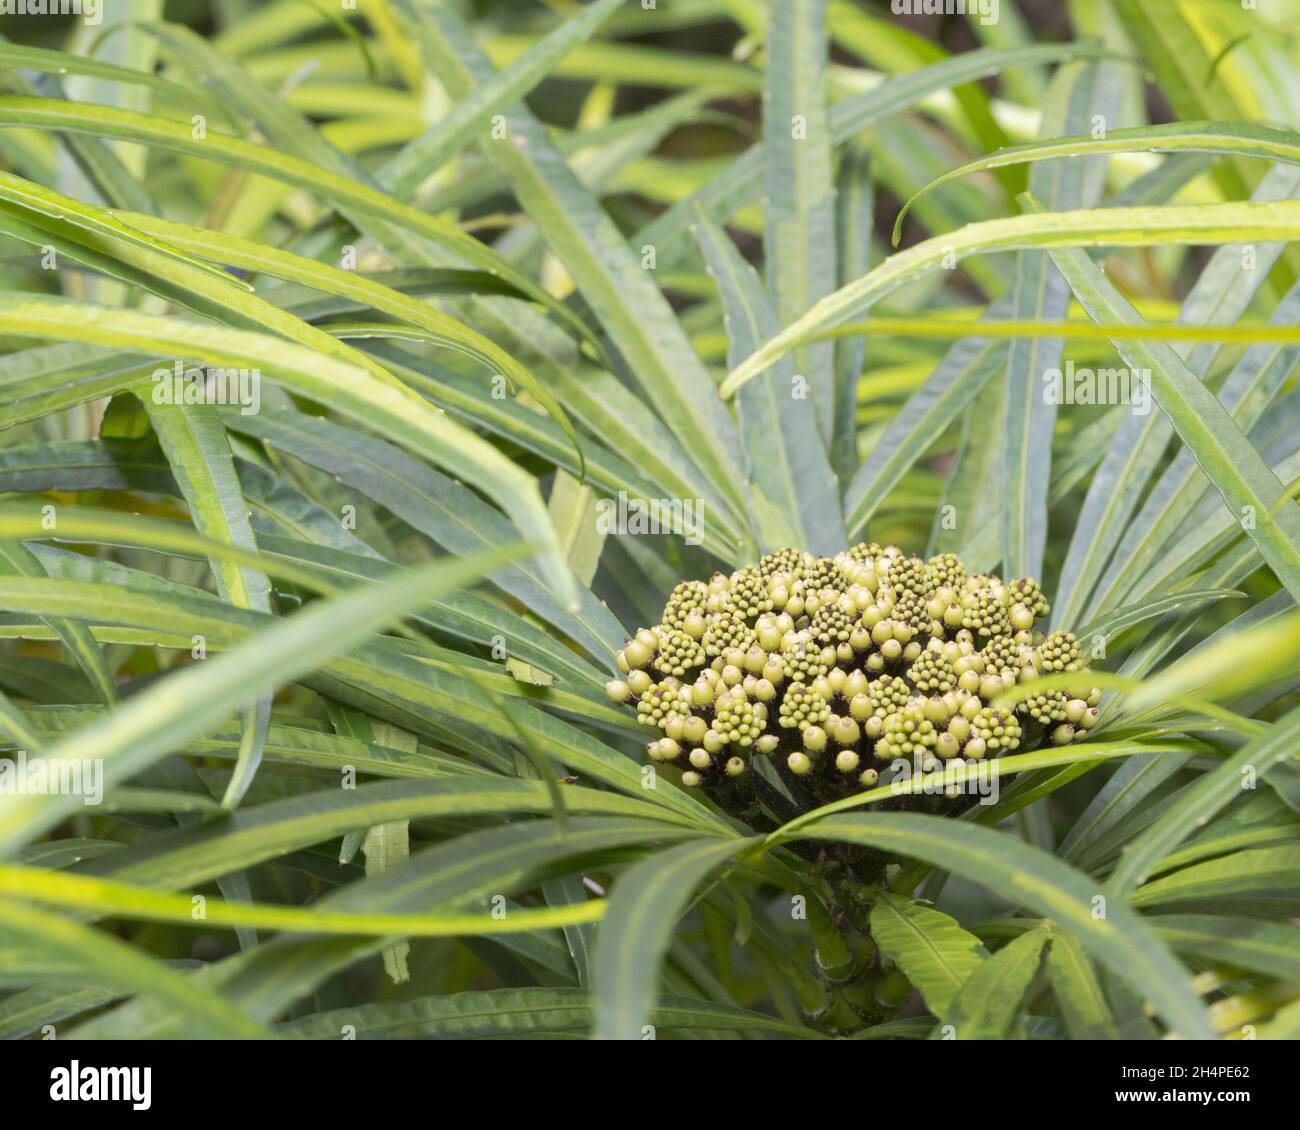 Closeup of Osmoxylon, the genus of flowering plants in the family Araliaceae. Stock Photo